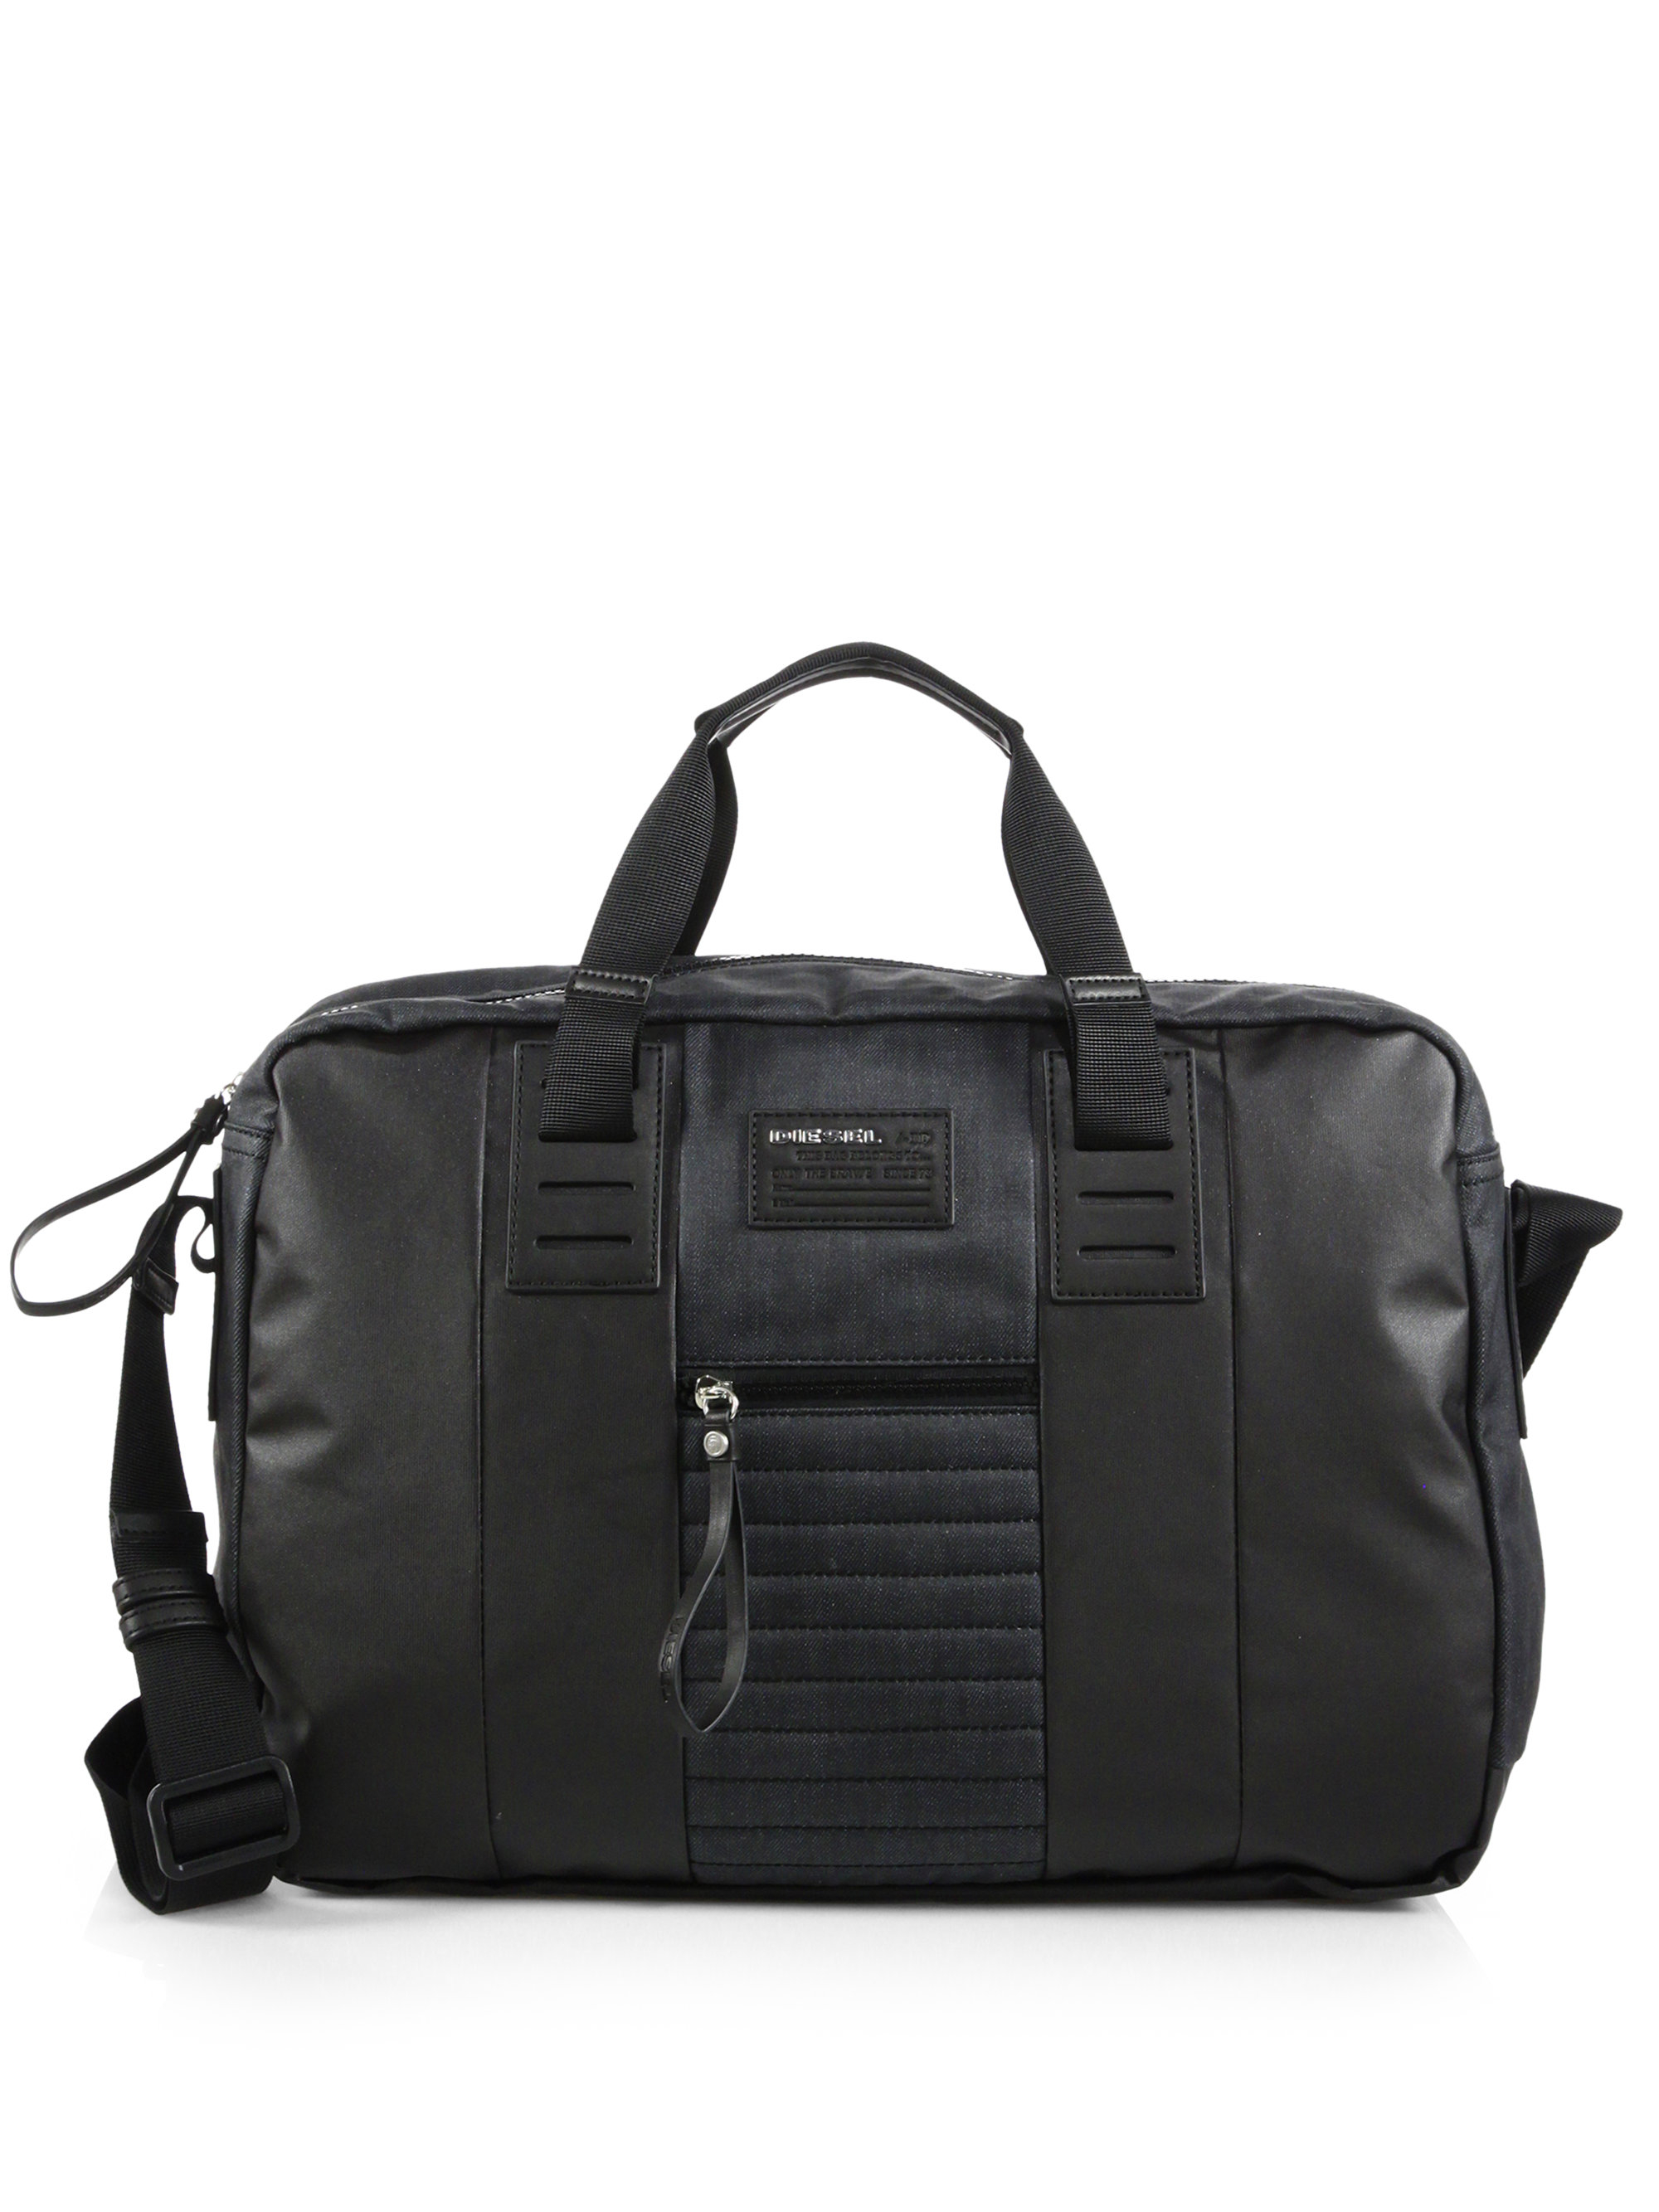 DIESEL B-king Denim Laptop Bag in Black for Men - Lyst